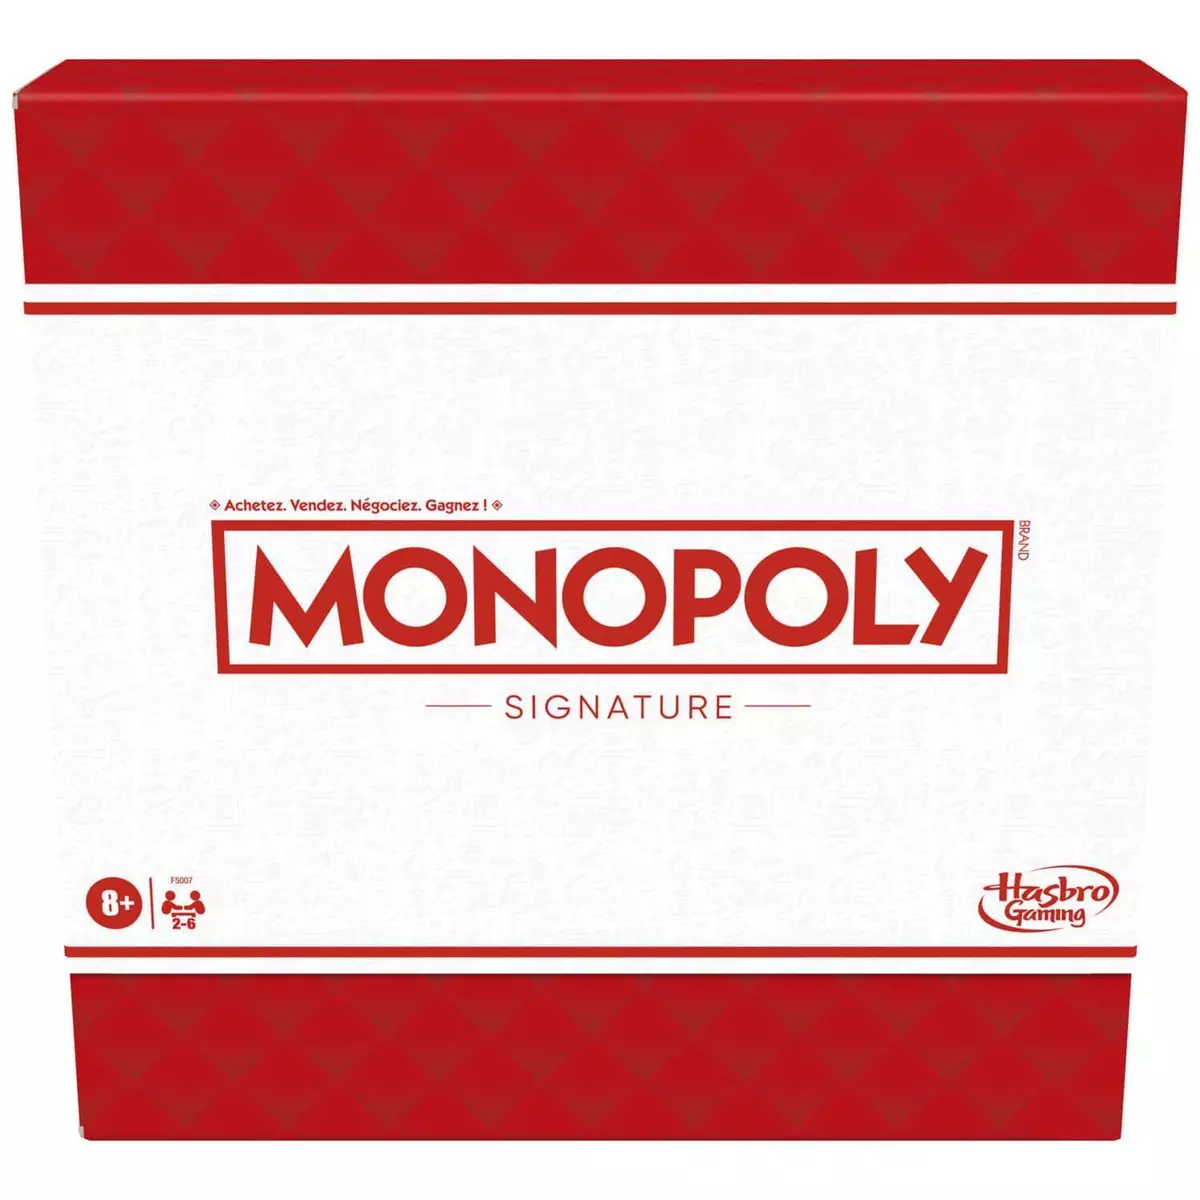 HASBRO Monopoly Signature